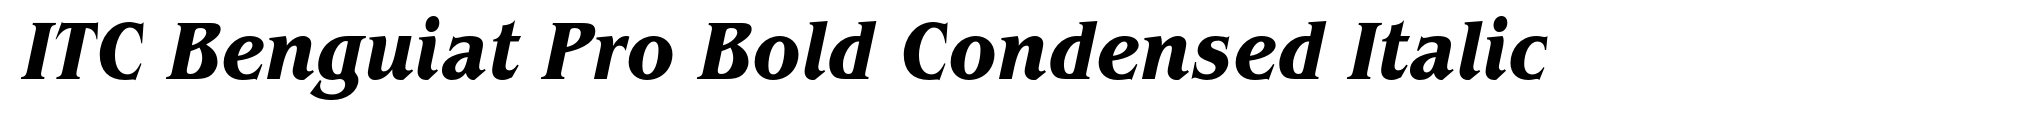 ITC Benguiat Pro Bold Condensed Italic image